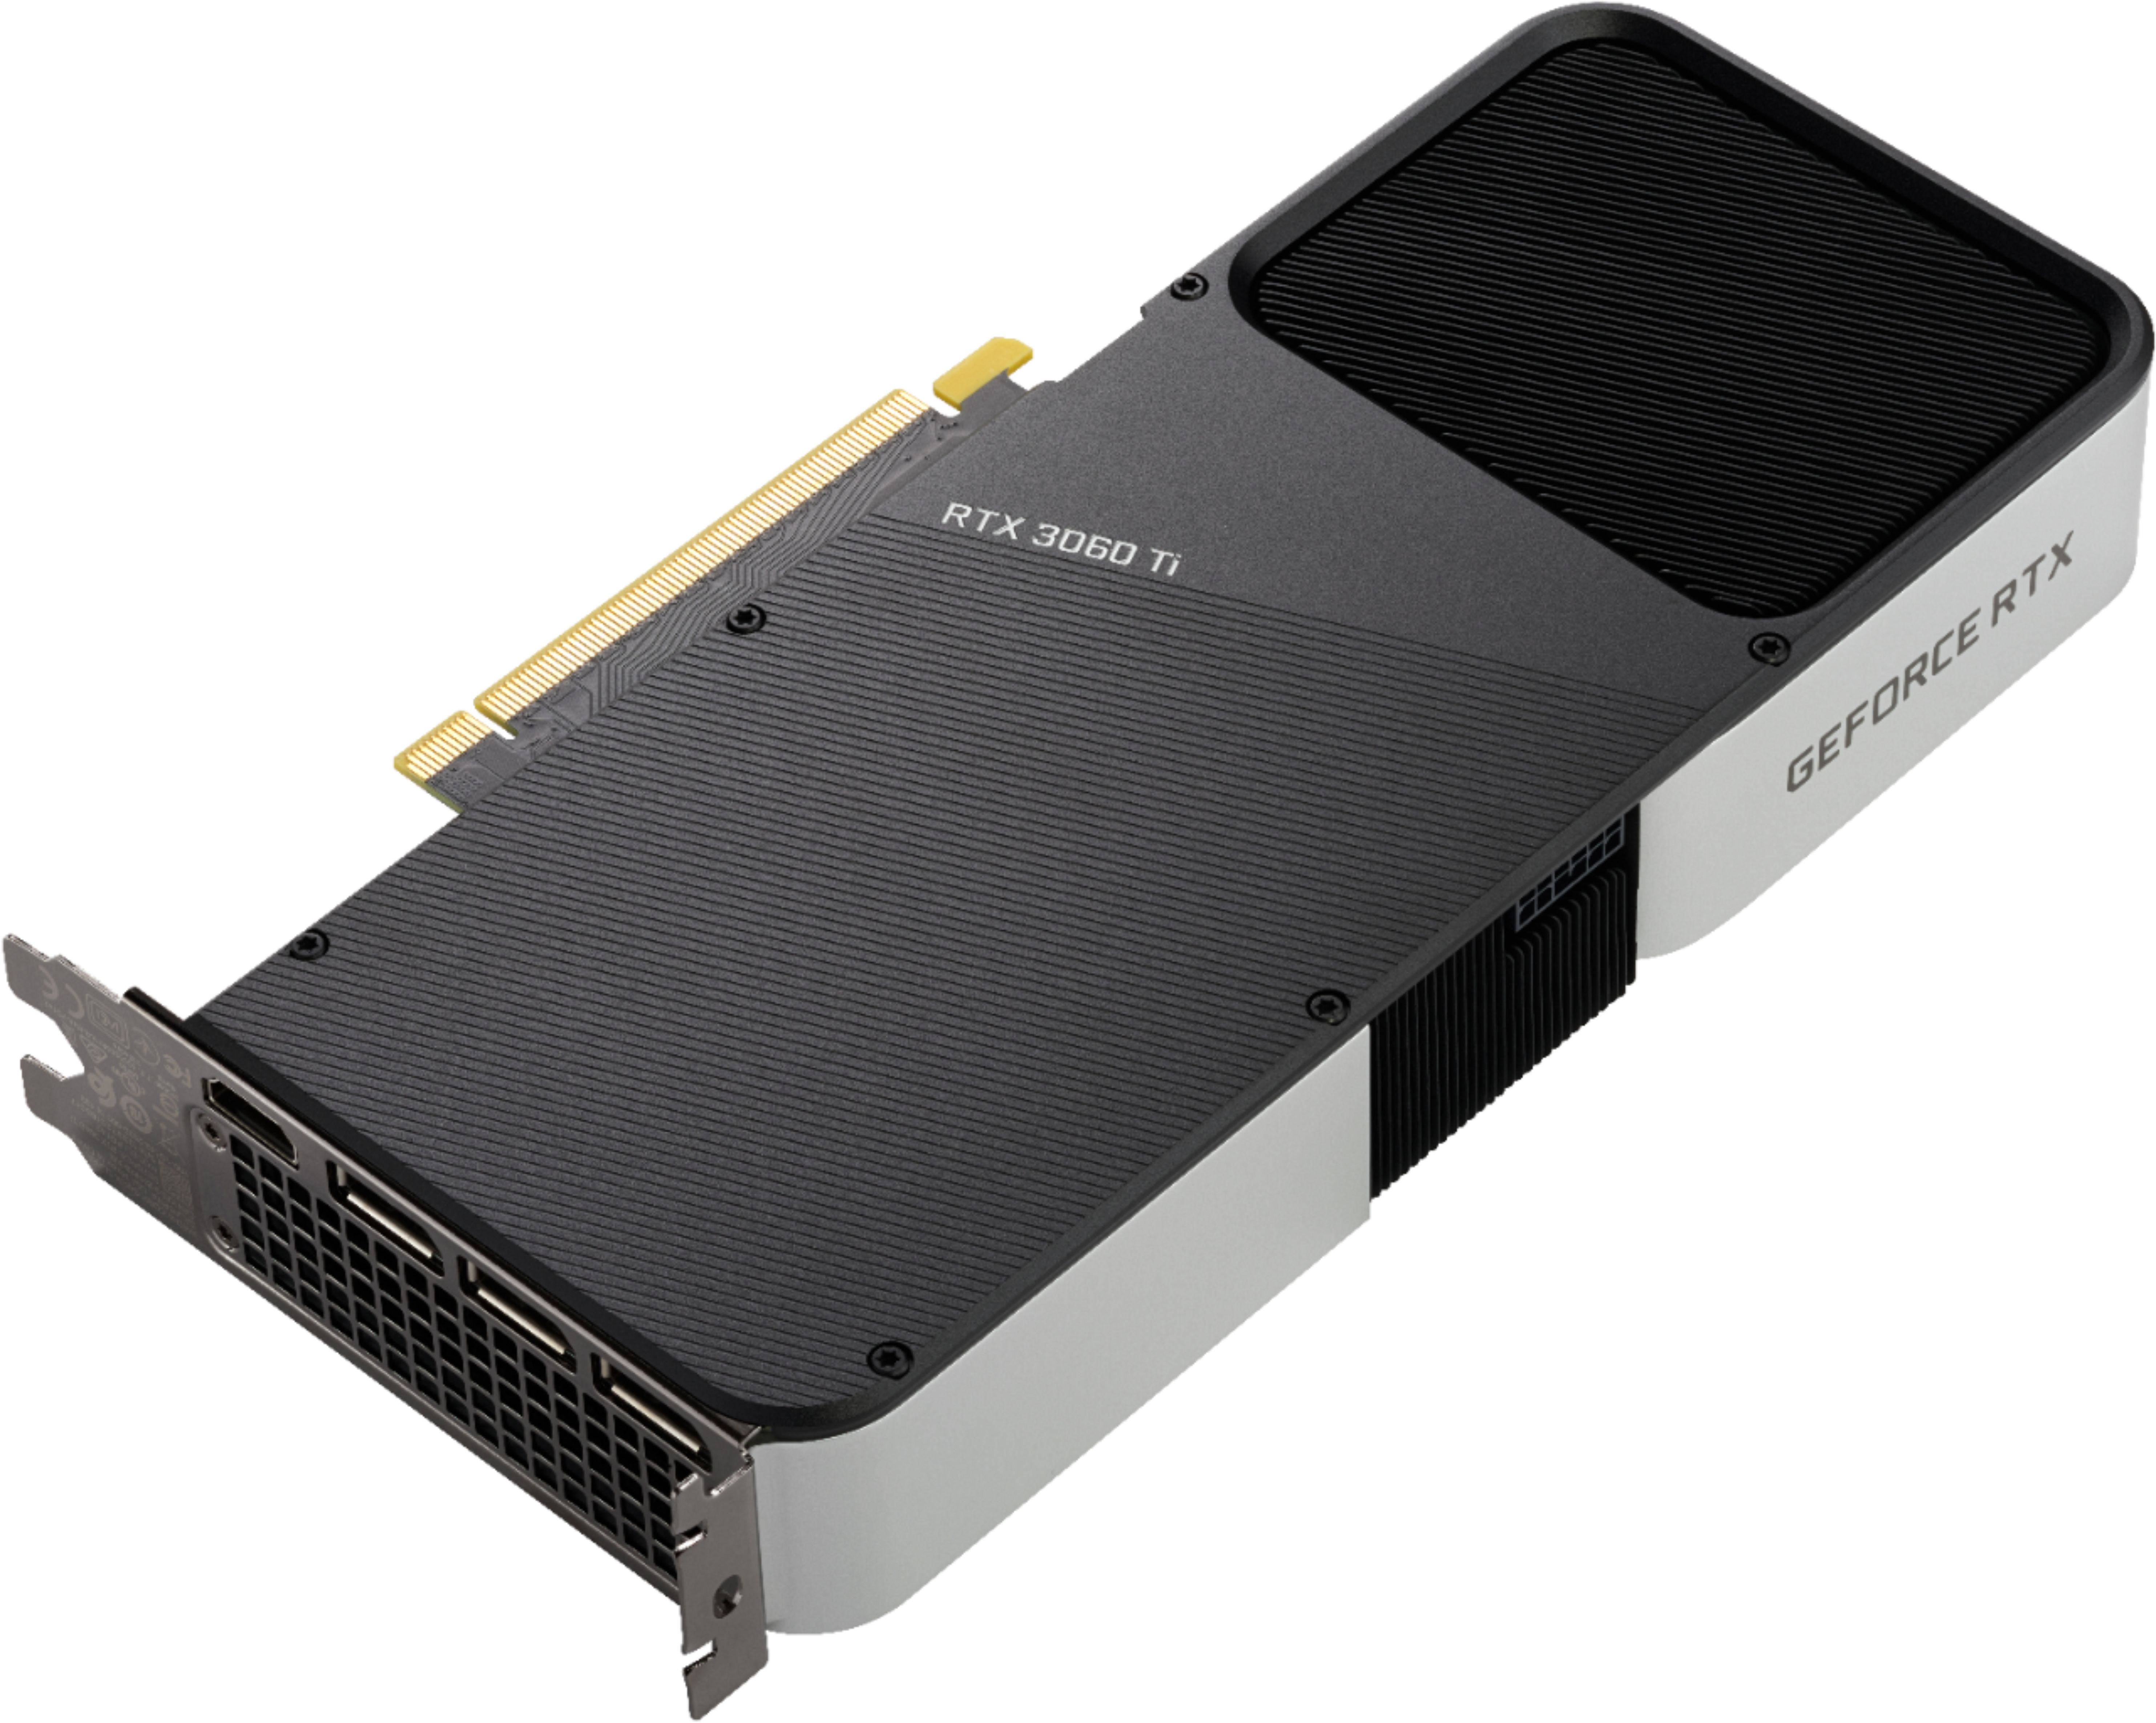 NVIDIA GeForce RTX 3060 Ti 8GB GDDR6 PCI Express 4.0 Graphics Card